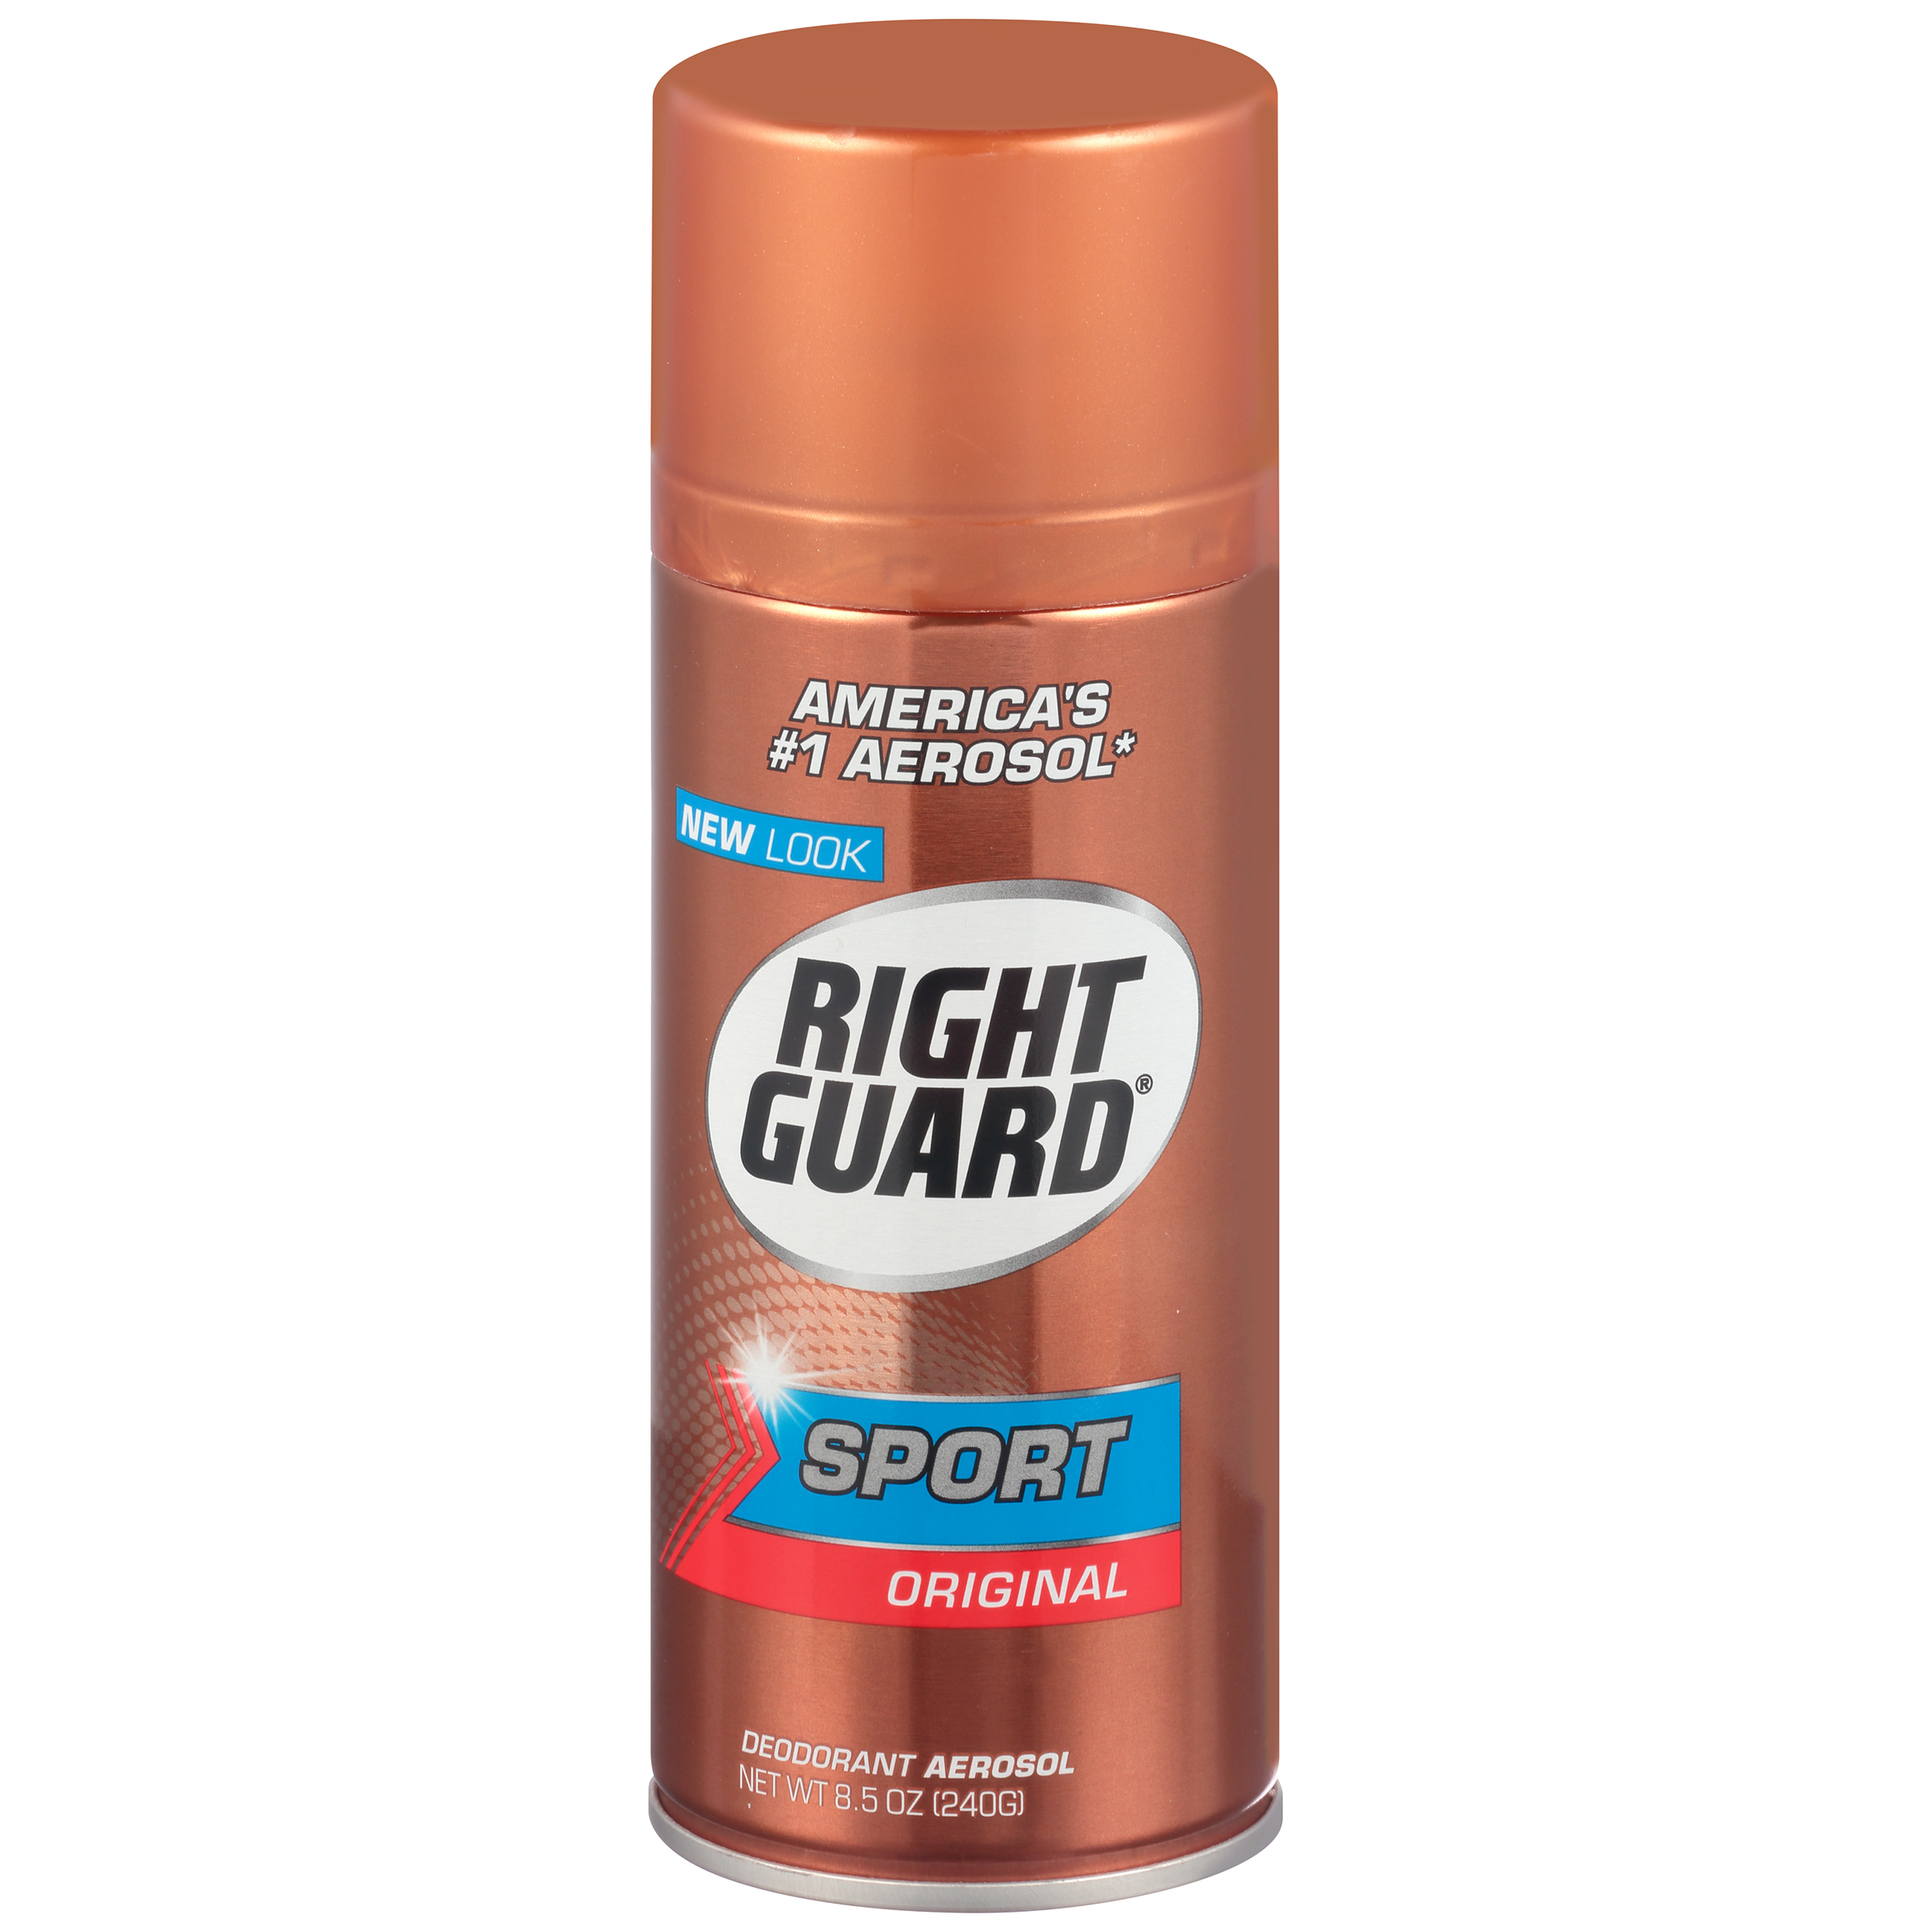 Right Guard Sport Deodorant, Aerosol, Original, 10 oz (283 g)